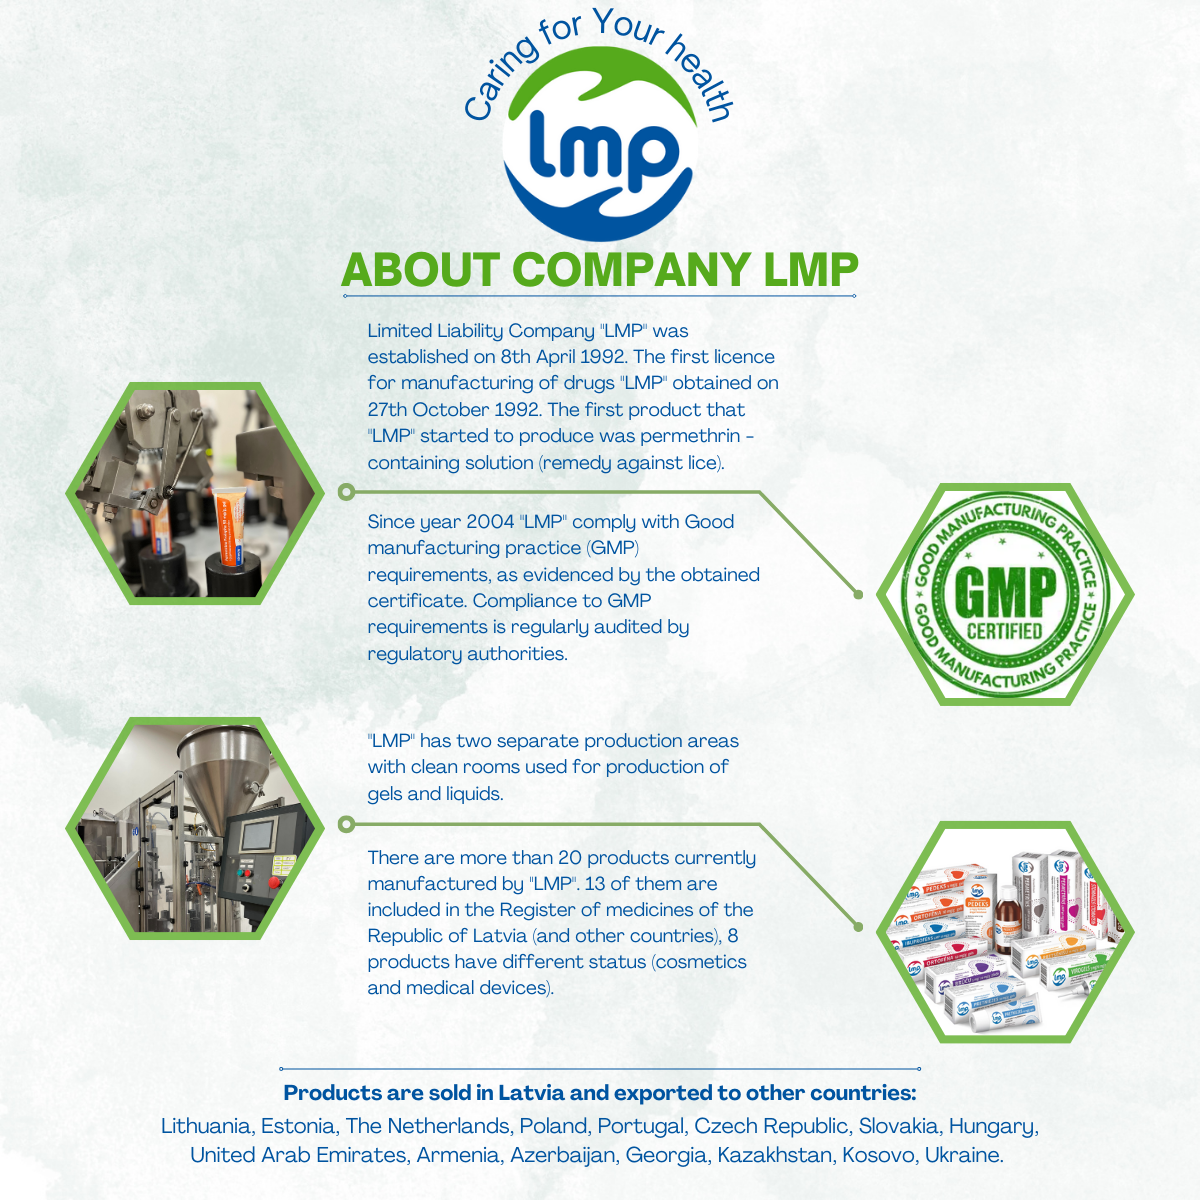 About LMP LLC